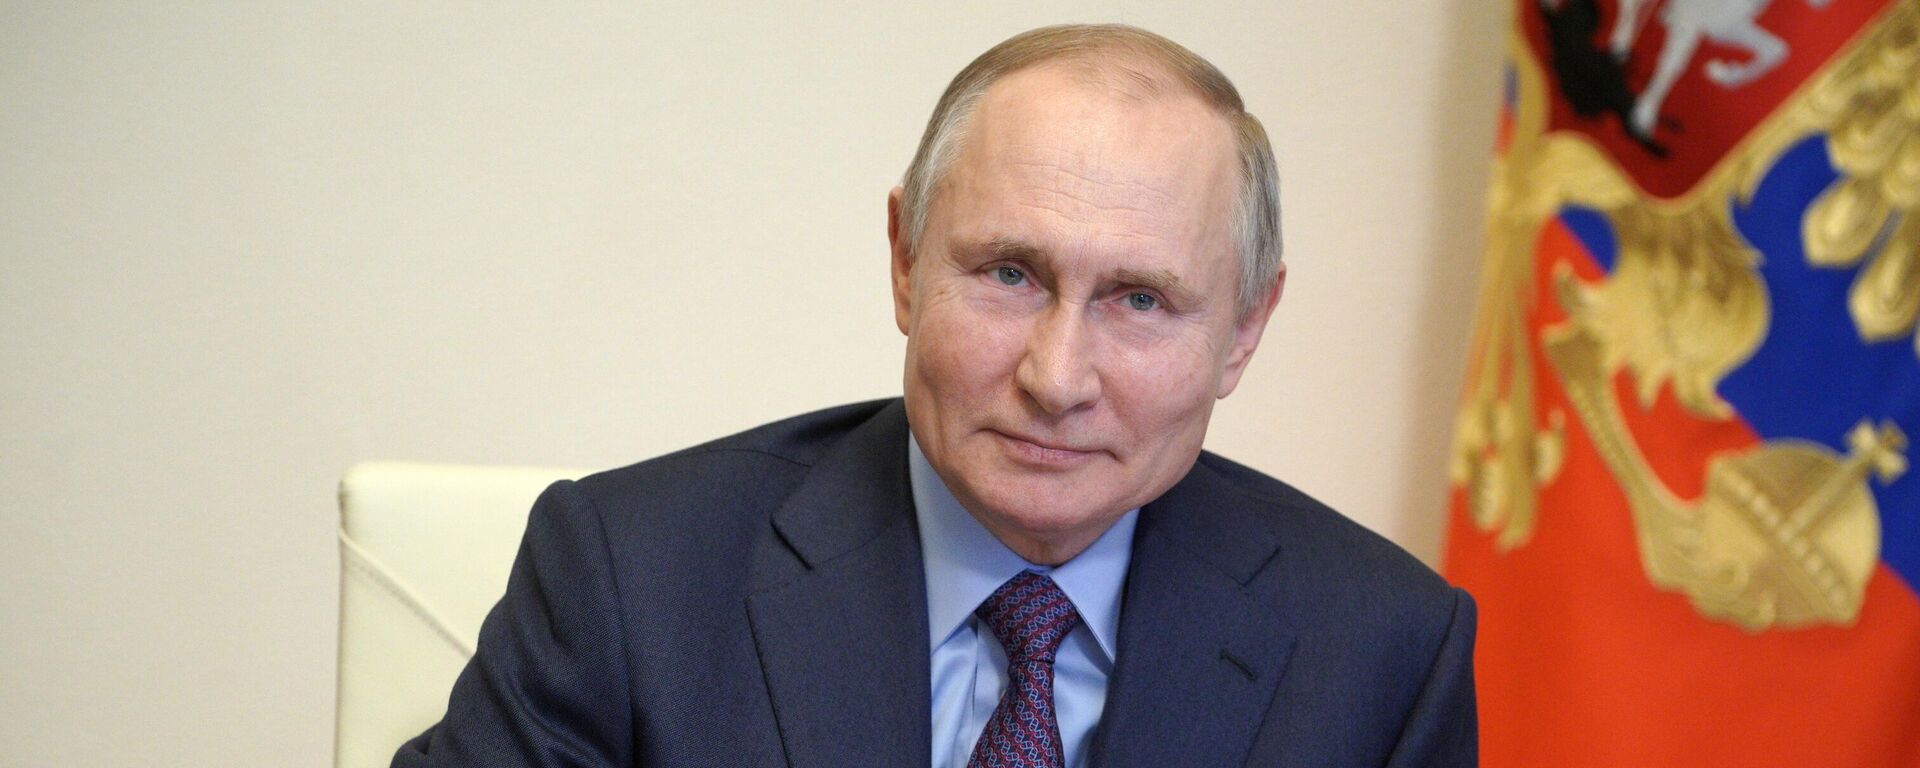 Vladímir Putin, presidente de Rusia - Sputnik Mundo, 1920, 10.05.2021